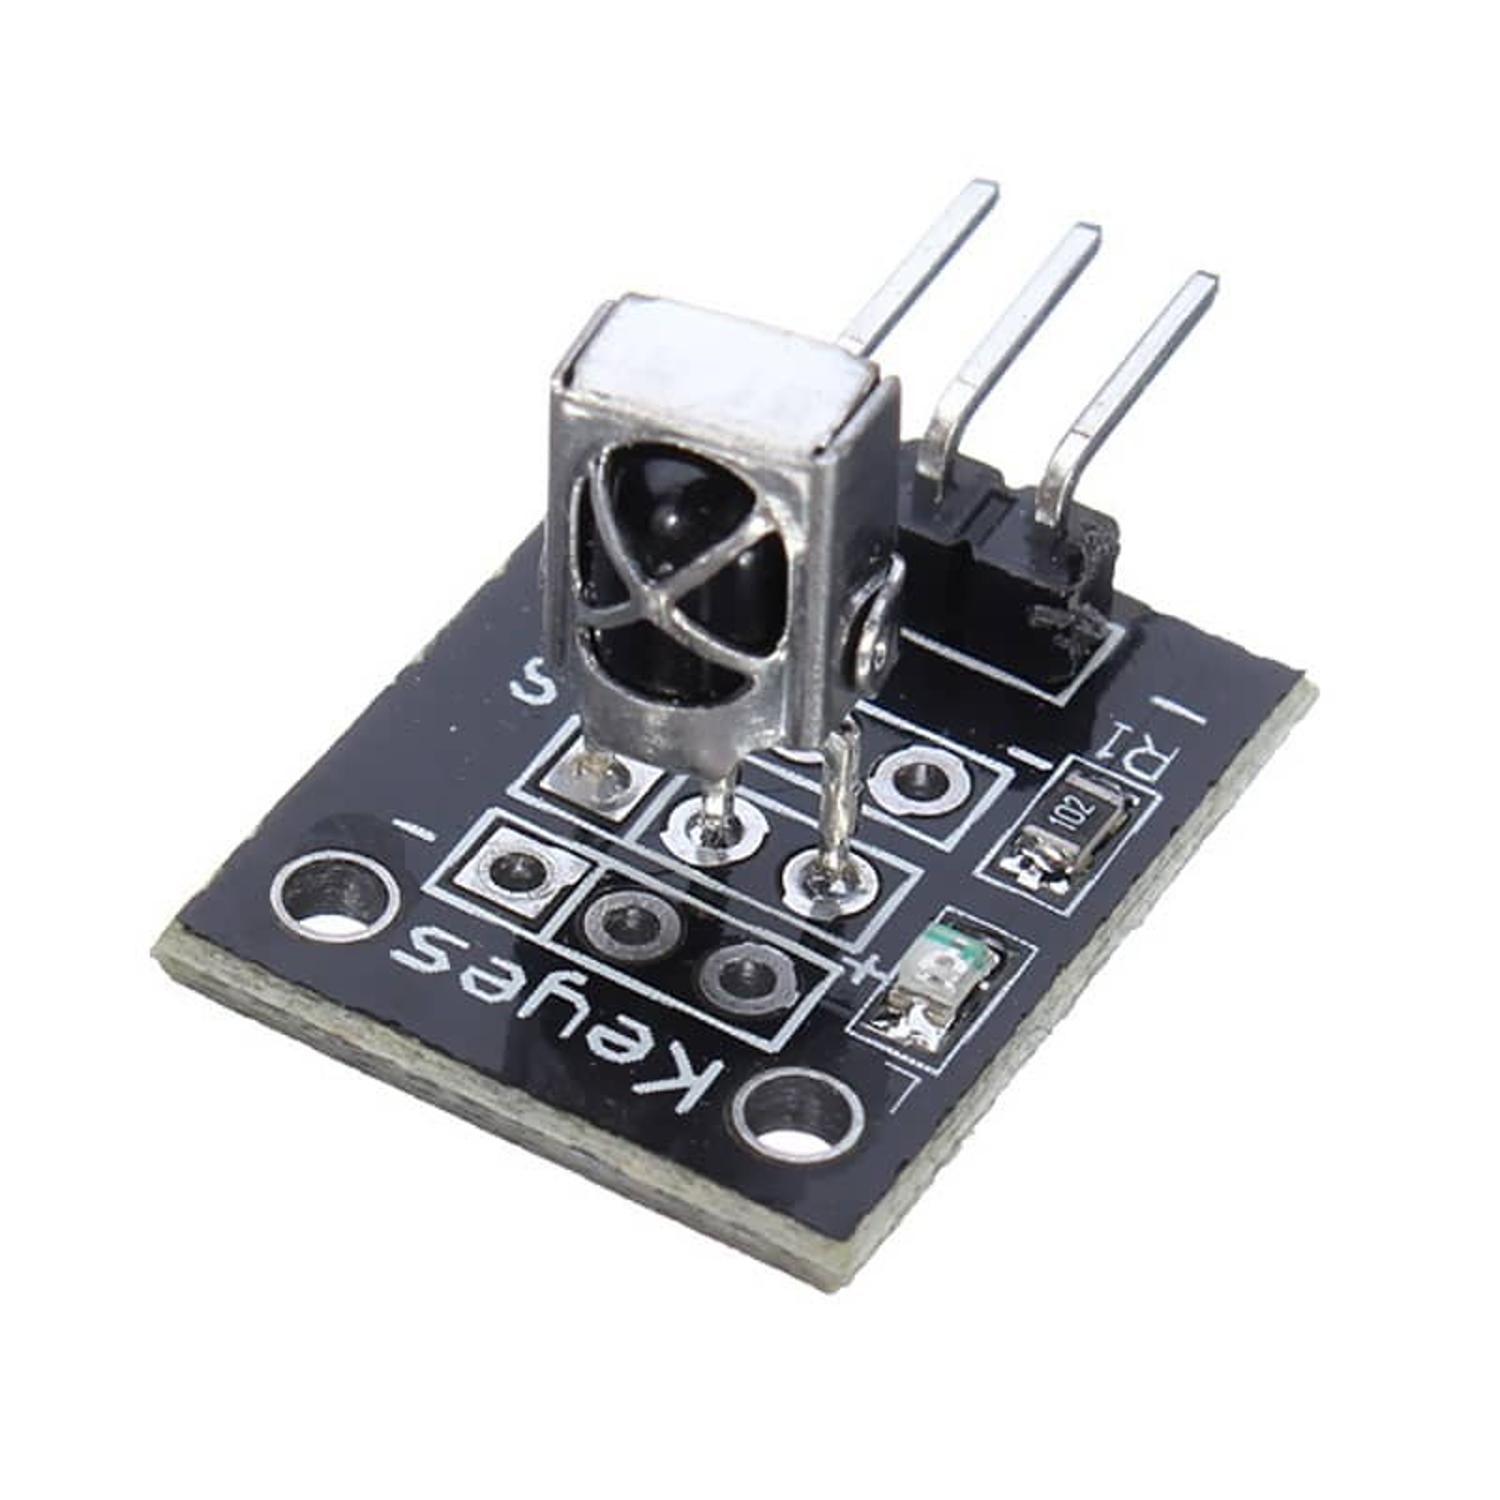 Sensor Receptor Infrarrojo IR Modulo KY-022